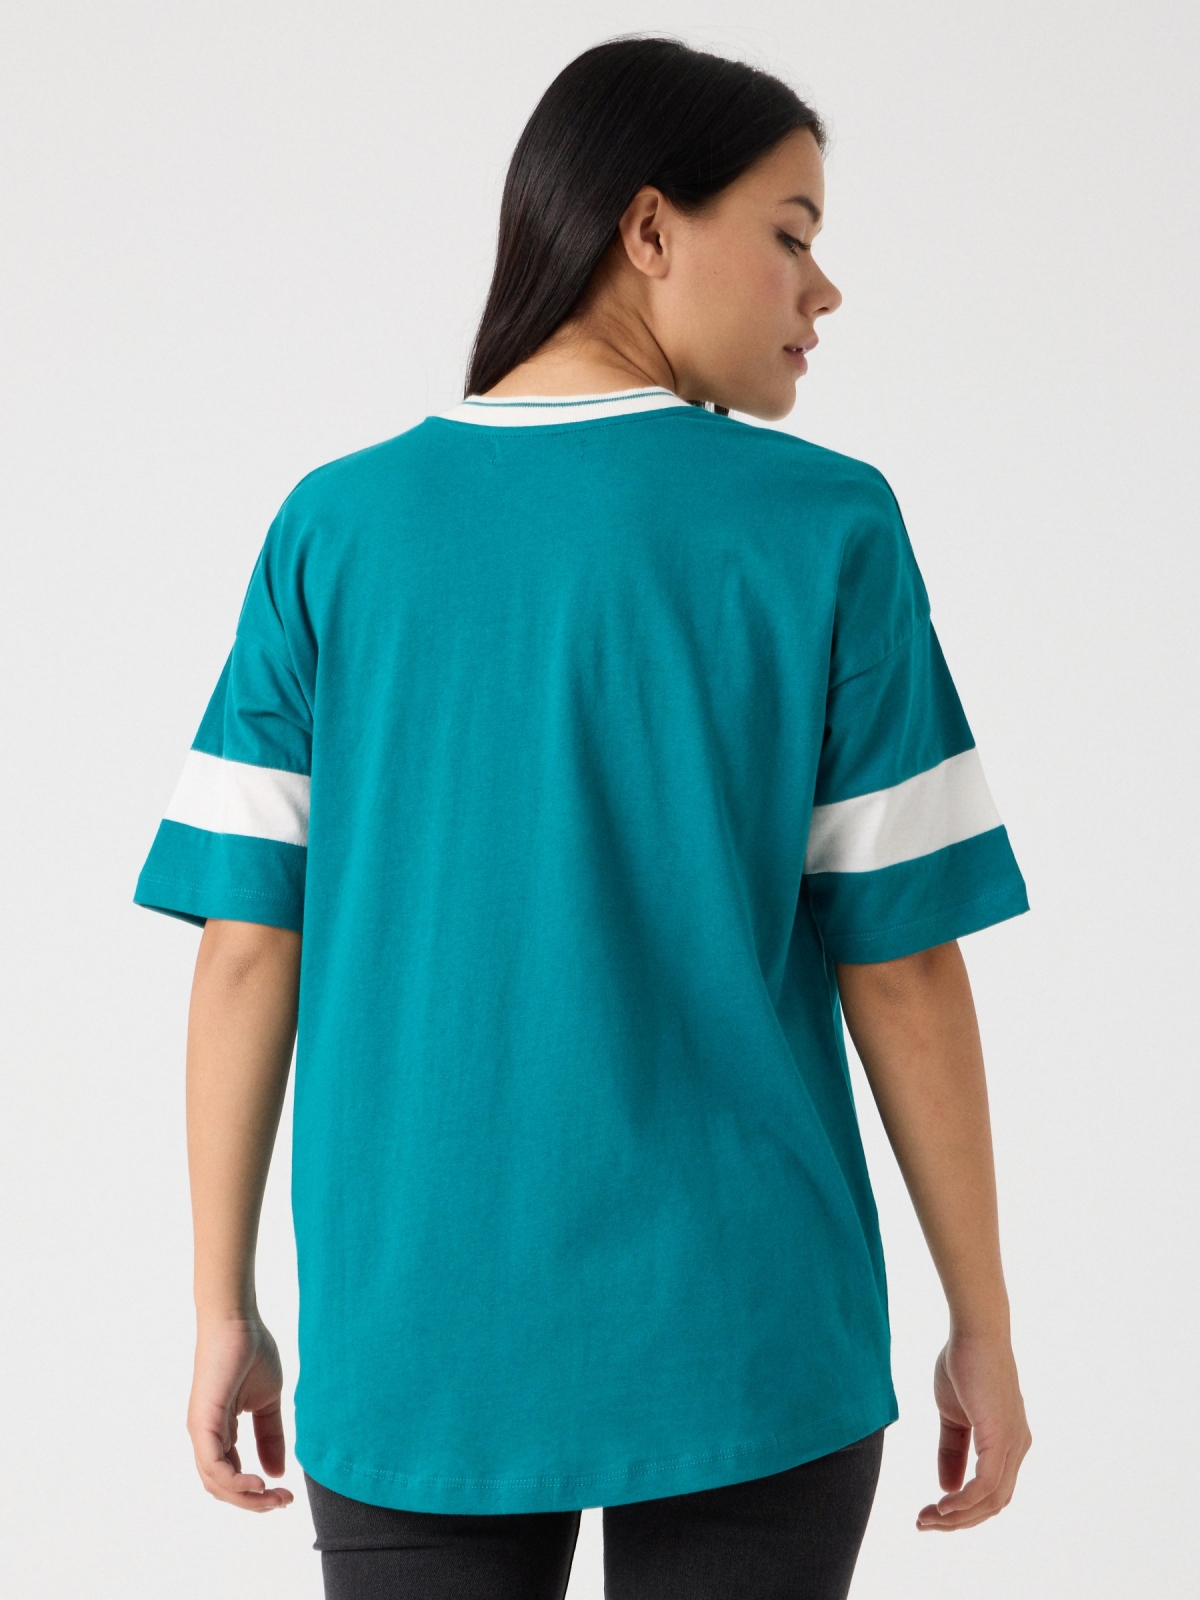 Camiseta college oversize verde mar vista media trasera